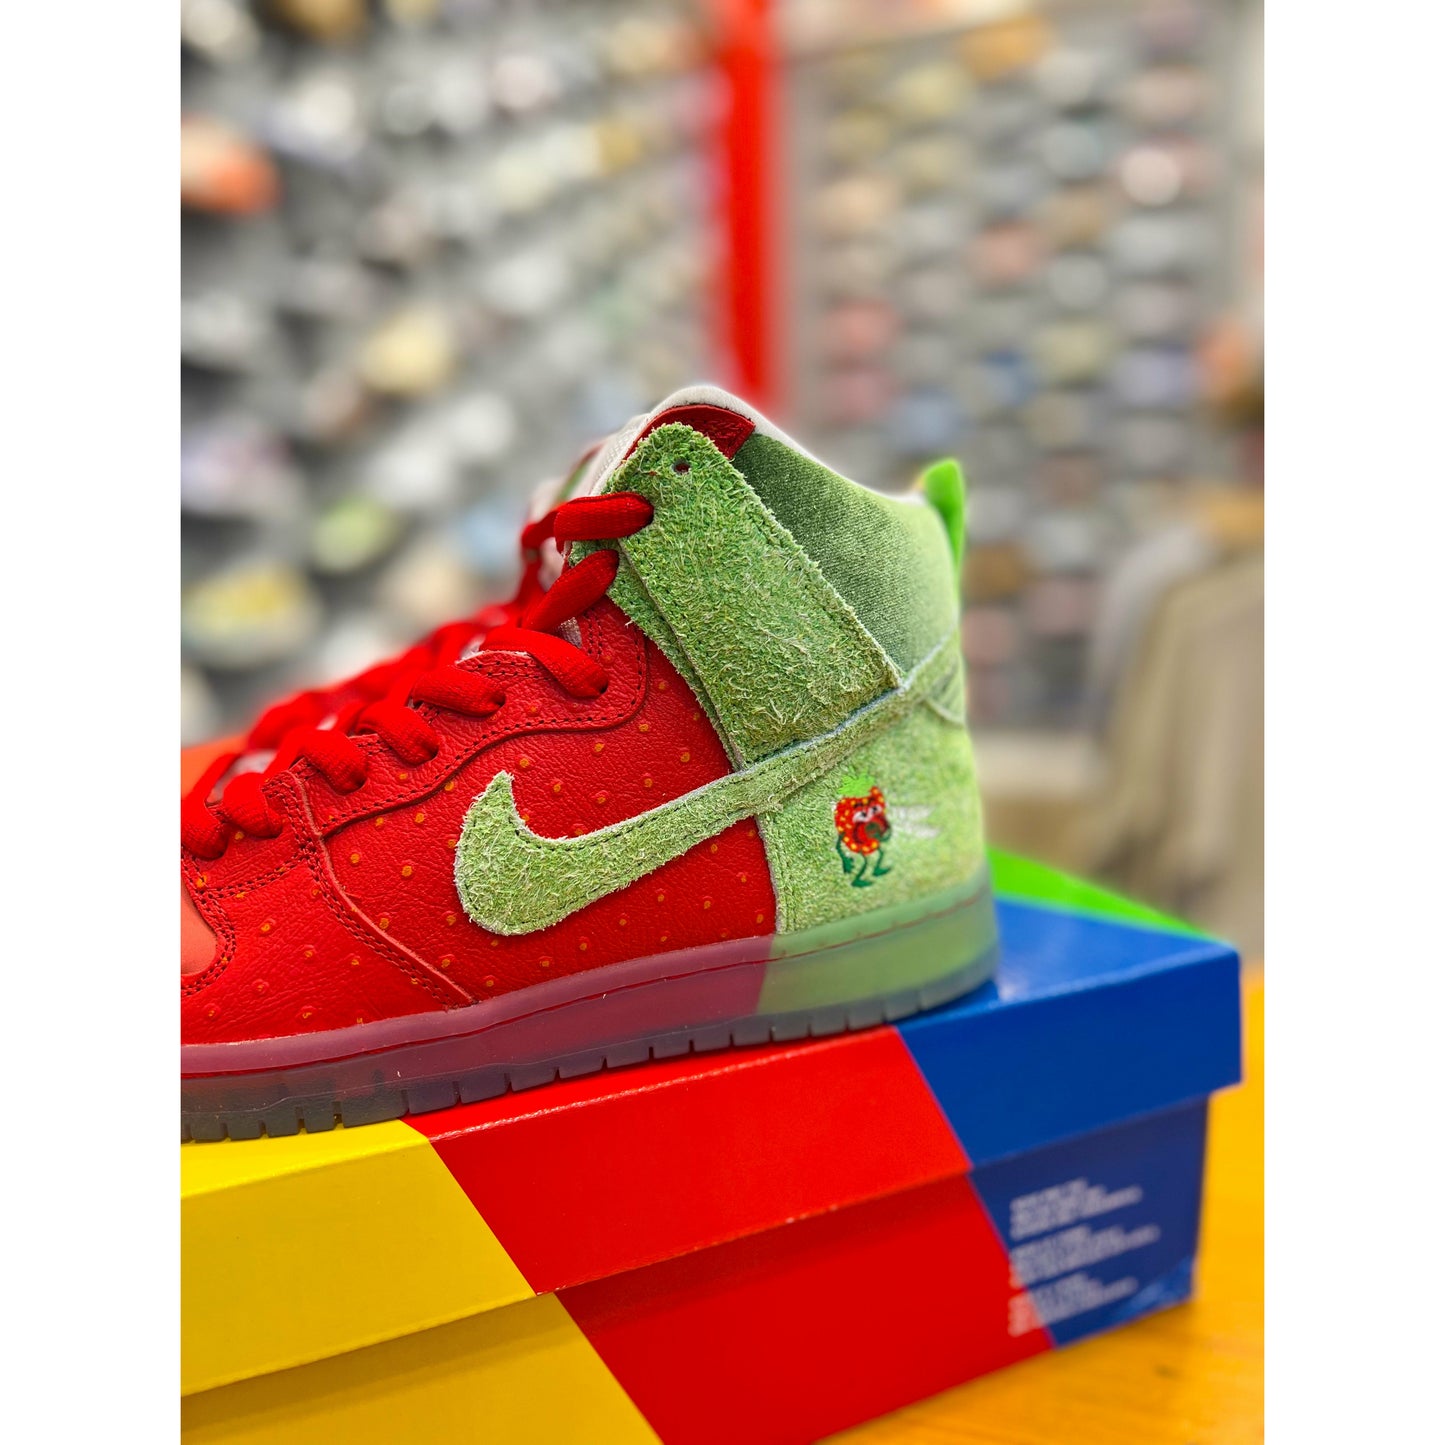 Nike SB Dunk High Strawberry Cough (Regular Box) from Nike